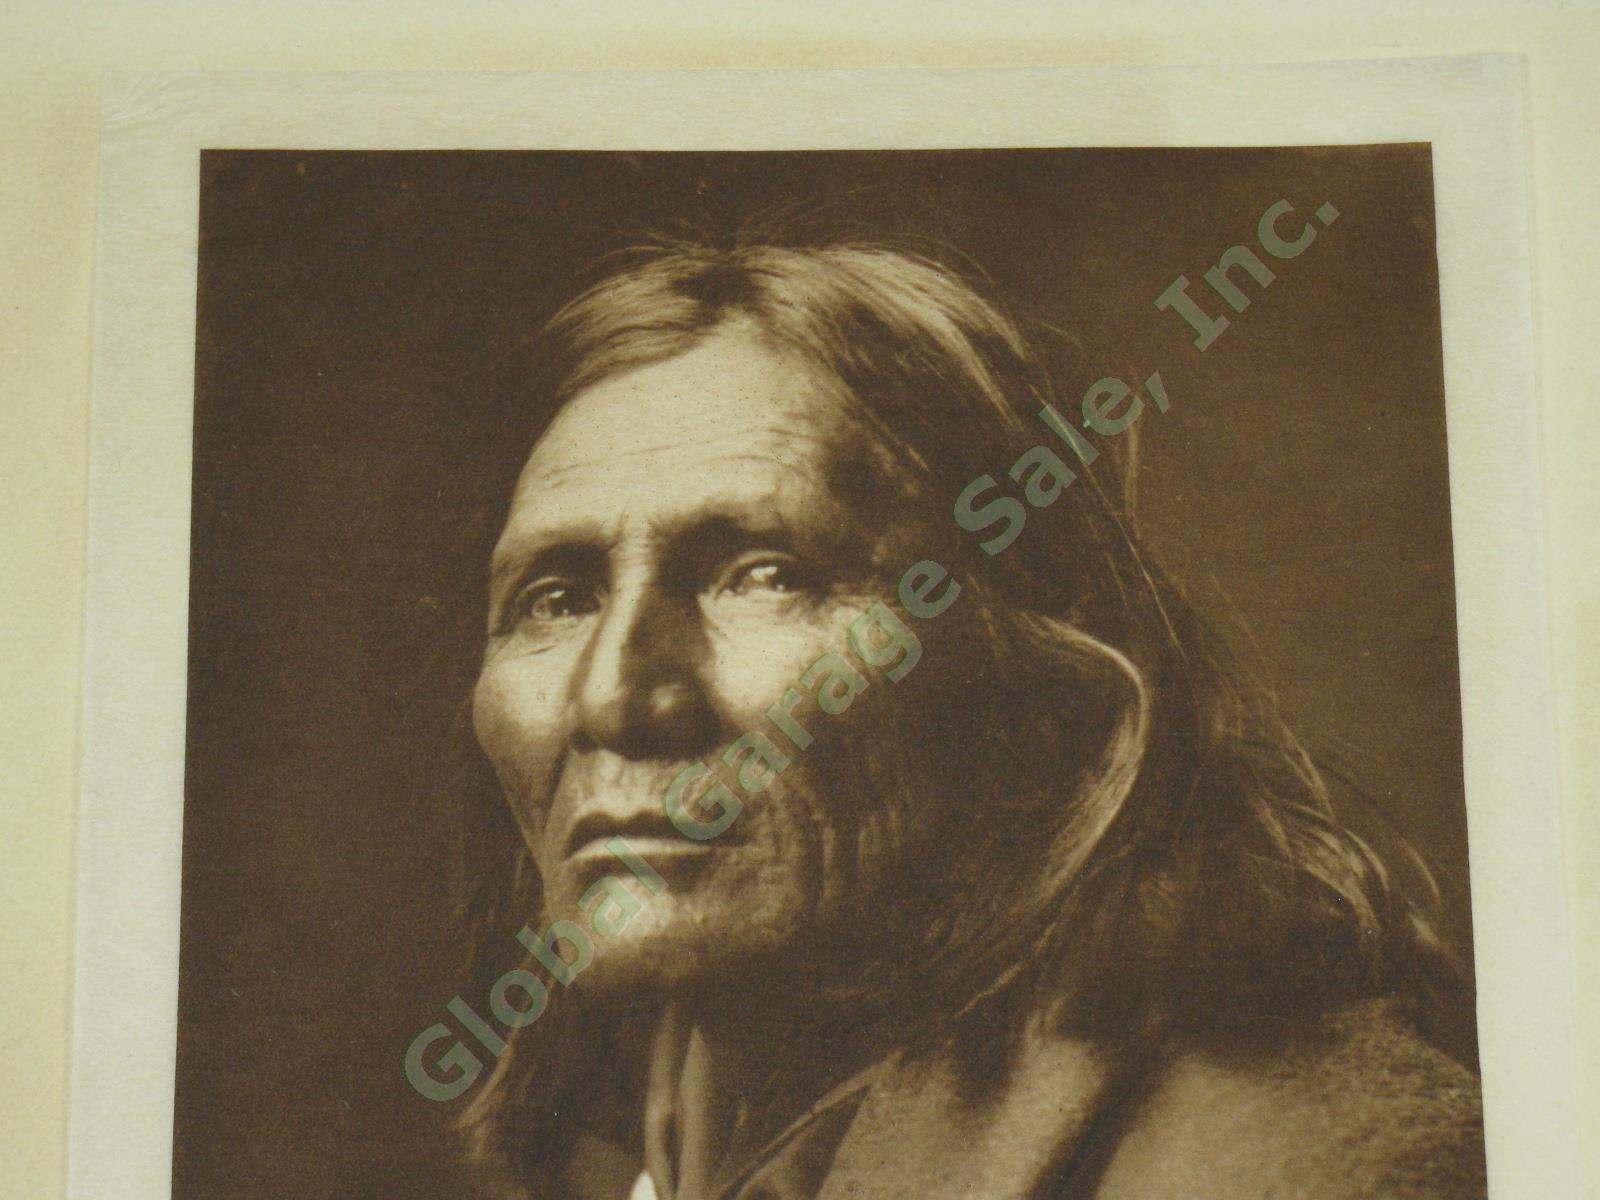 Original Edward Curtis Photo On Japanese Tissue 1906 Alchise Apache Indian Chief 1